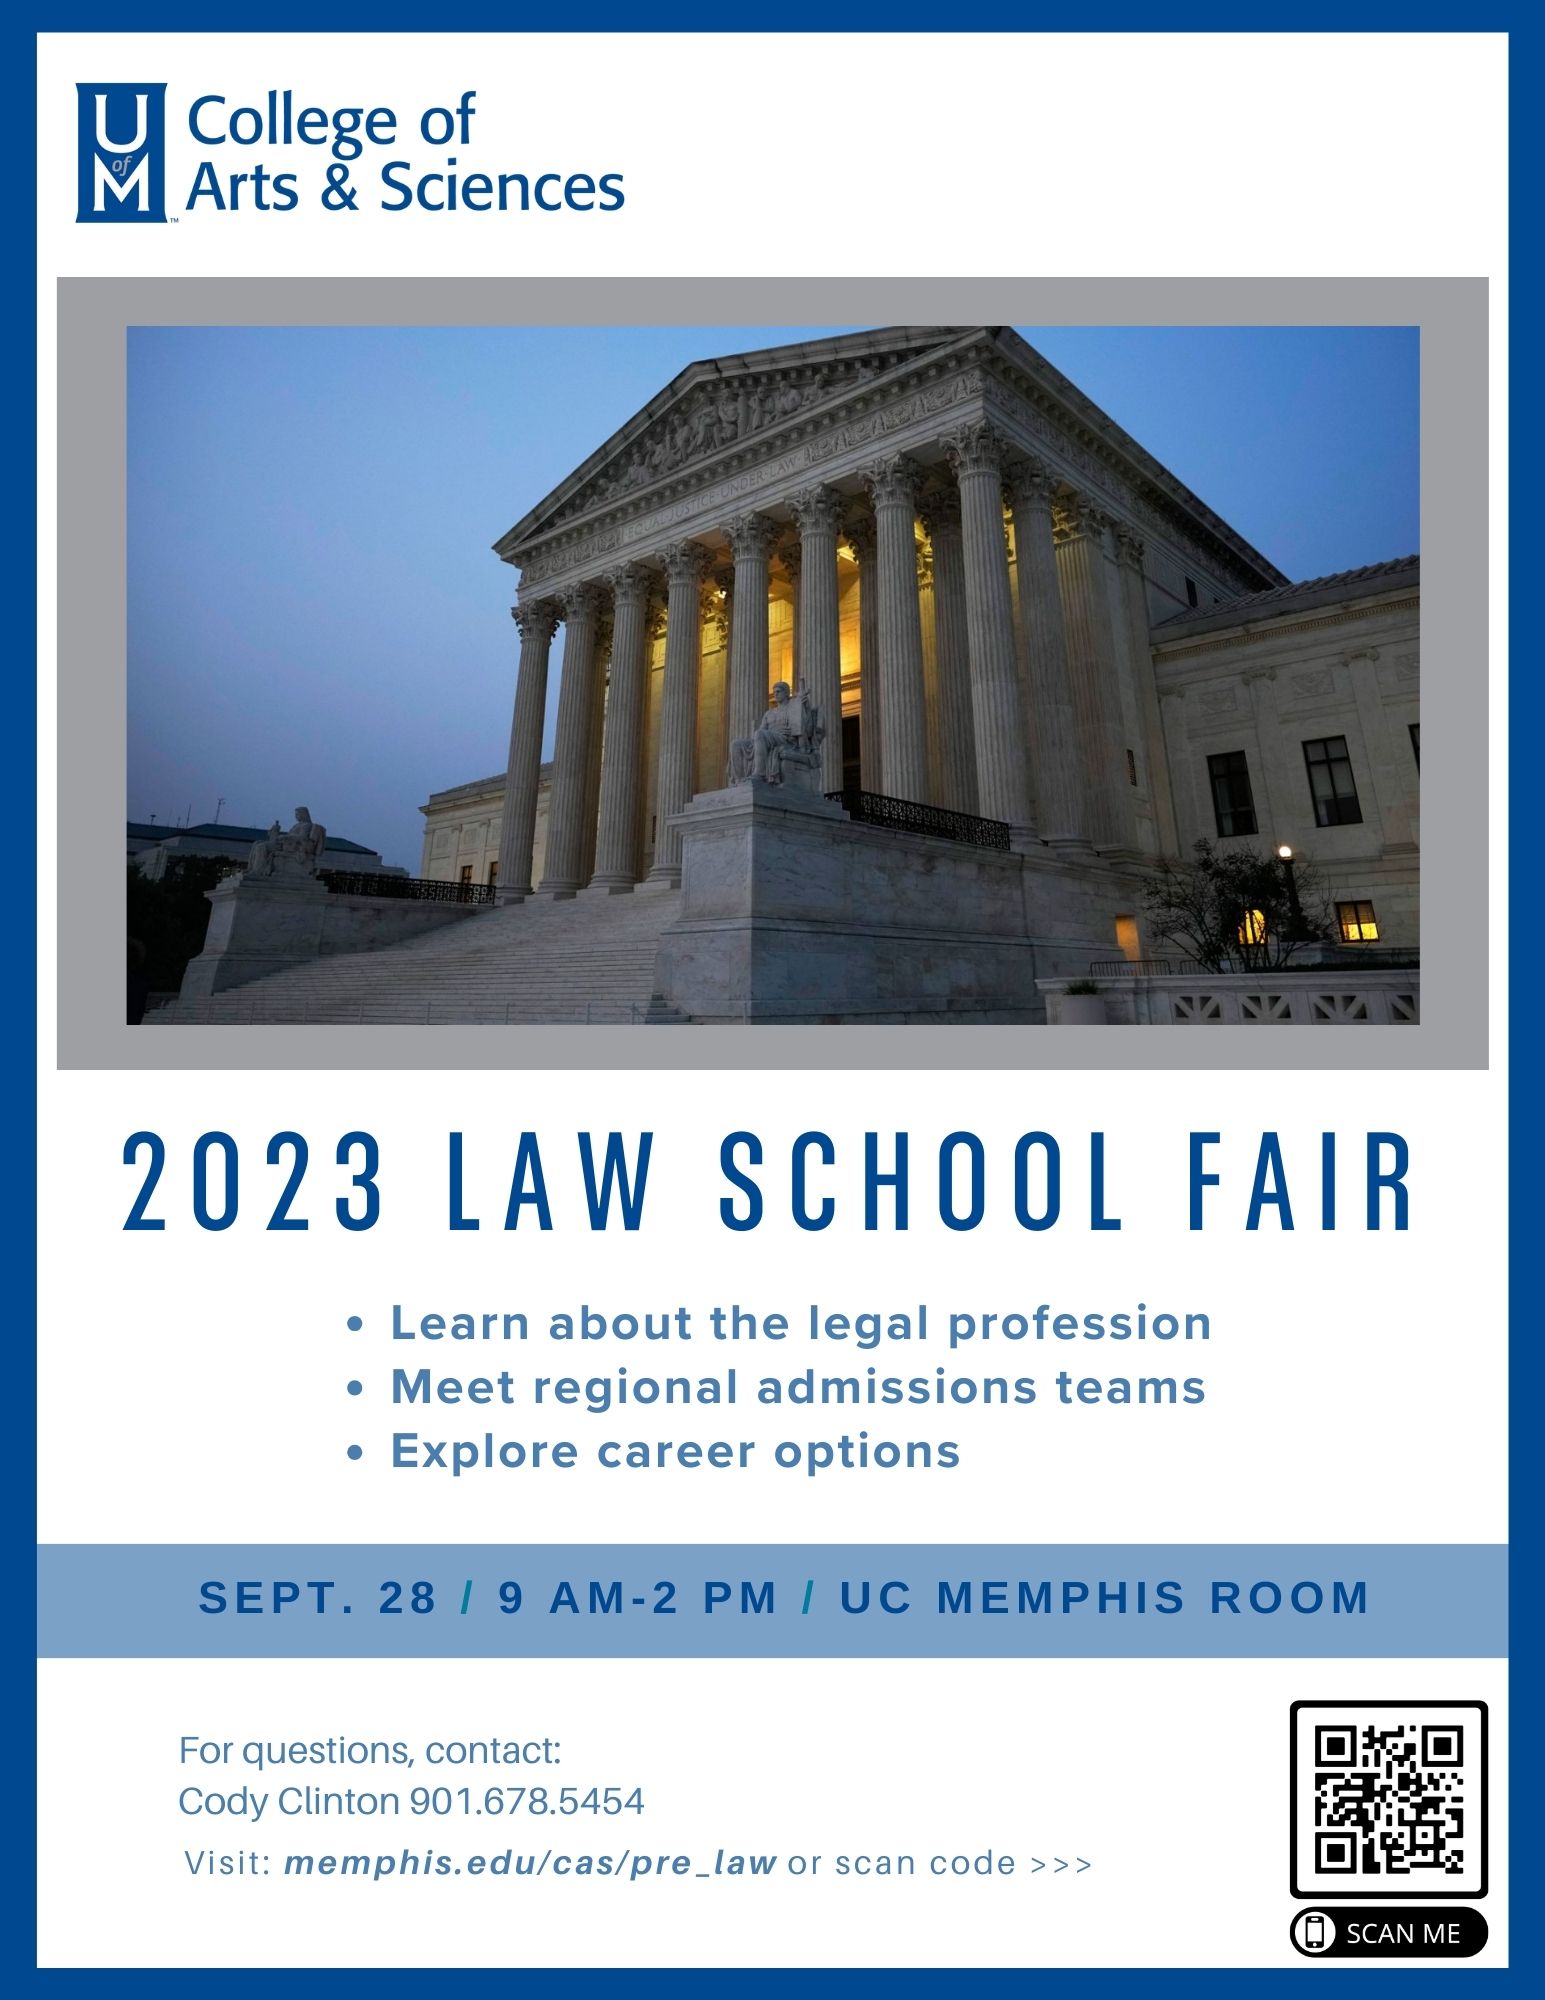 Law School Fair flyer